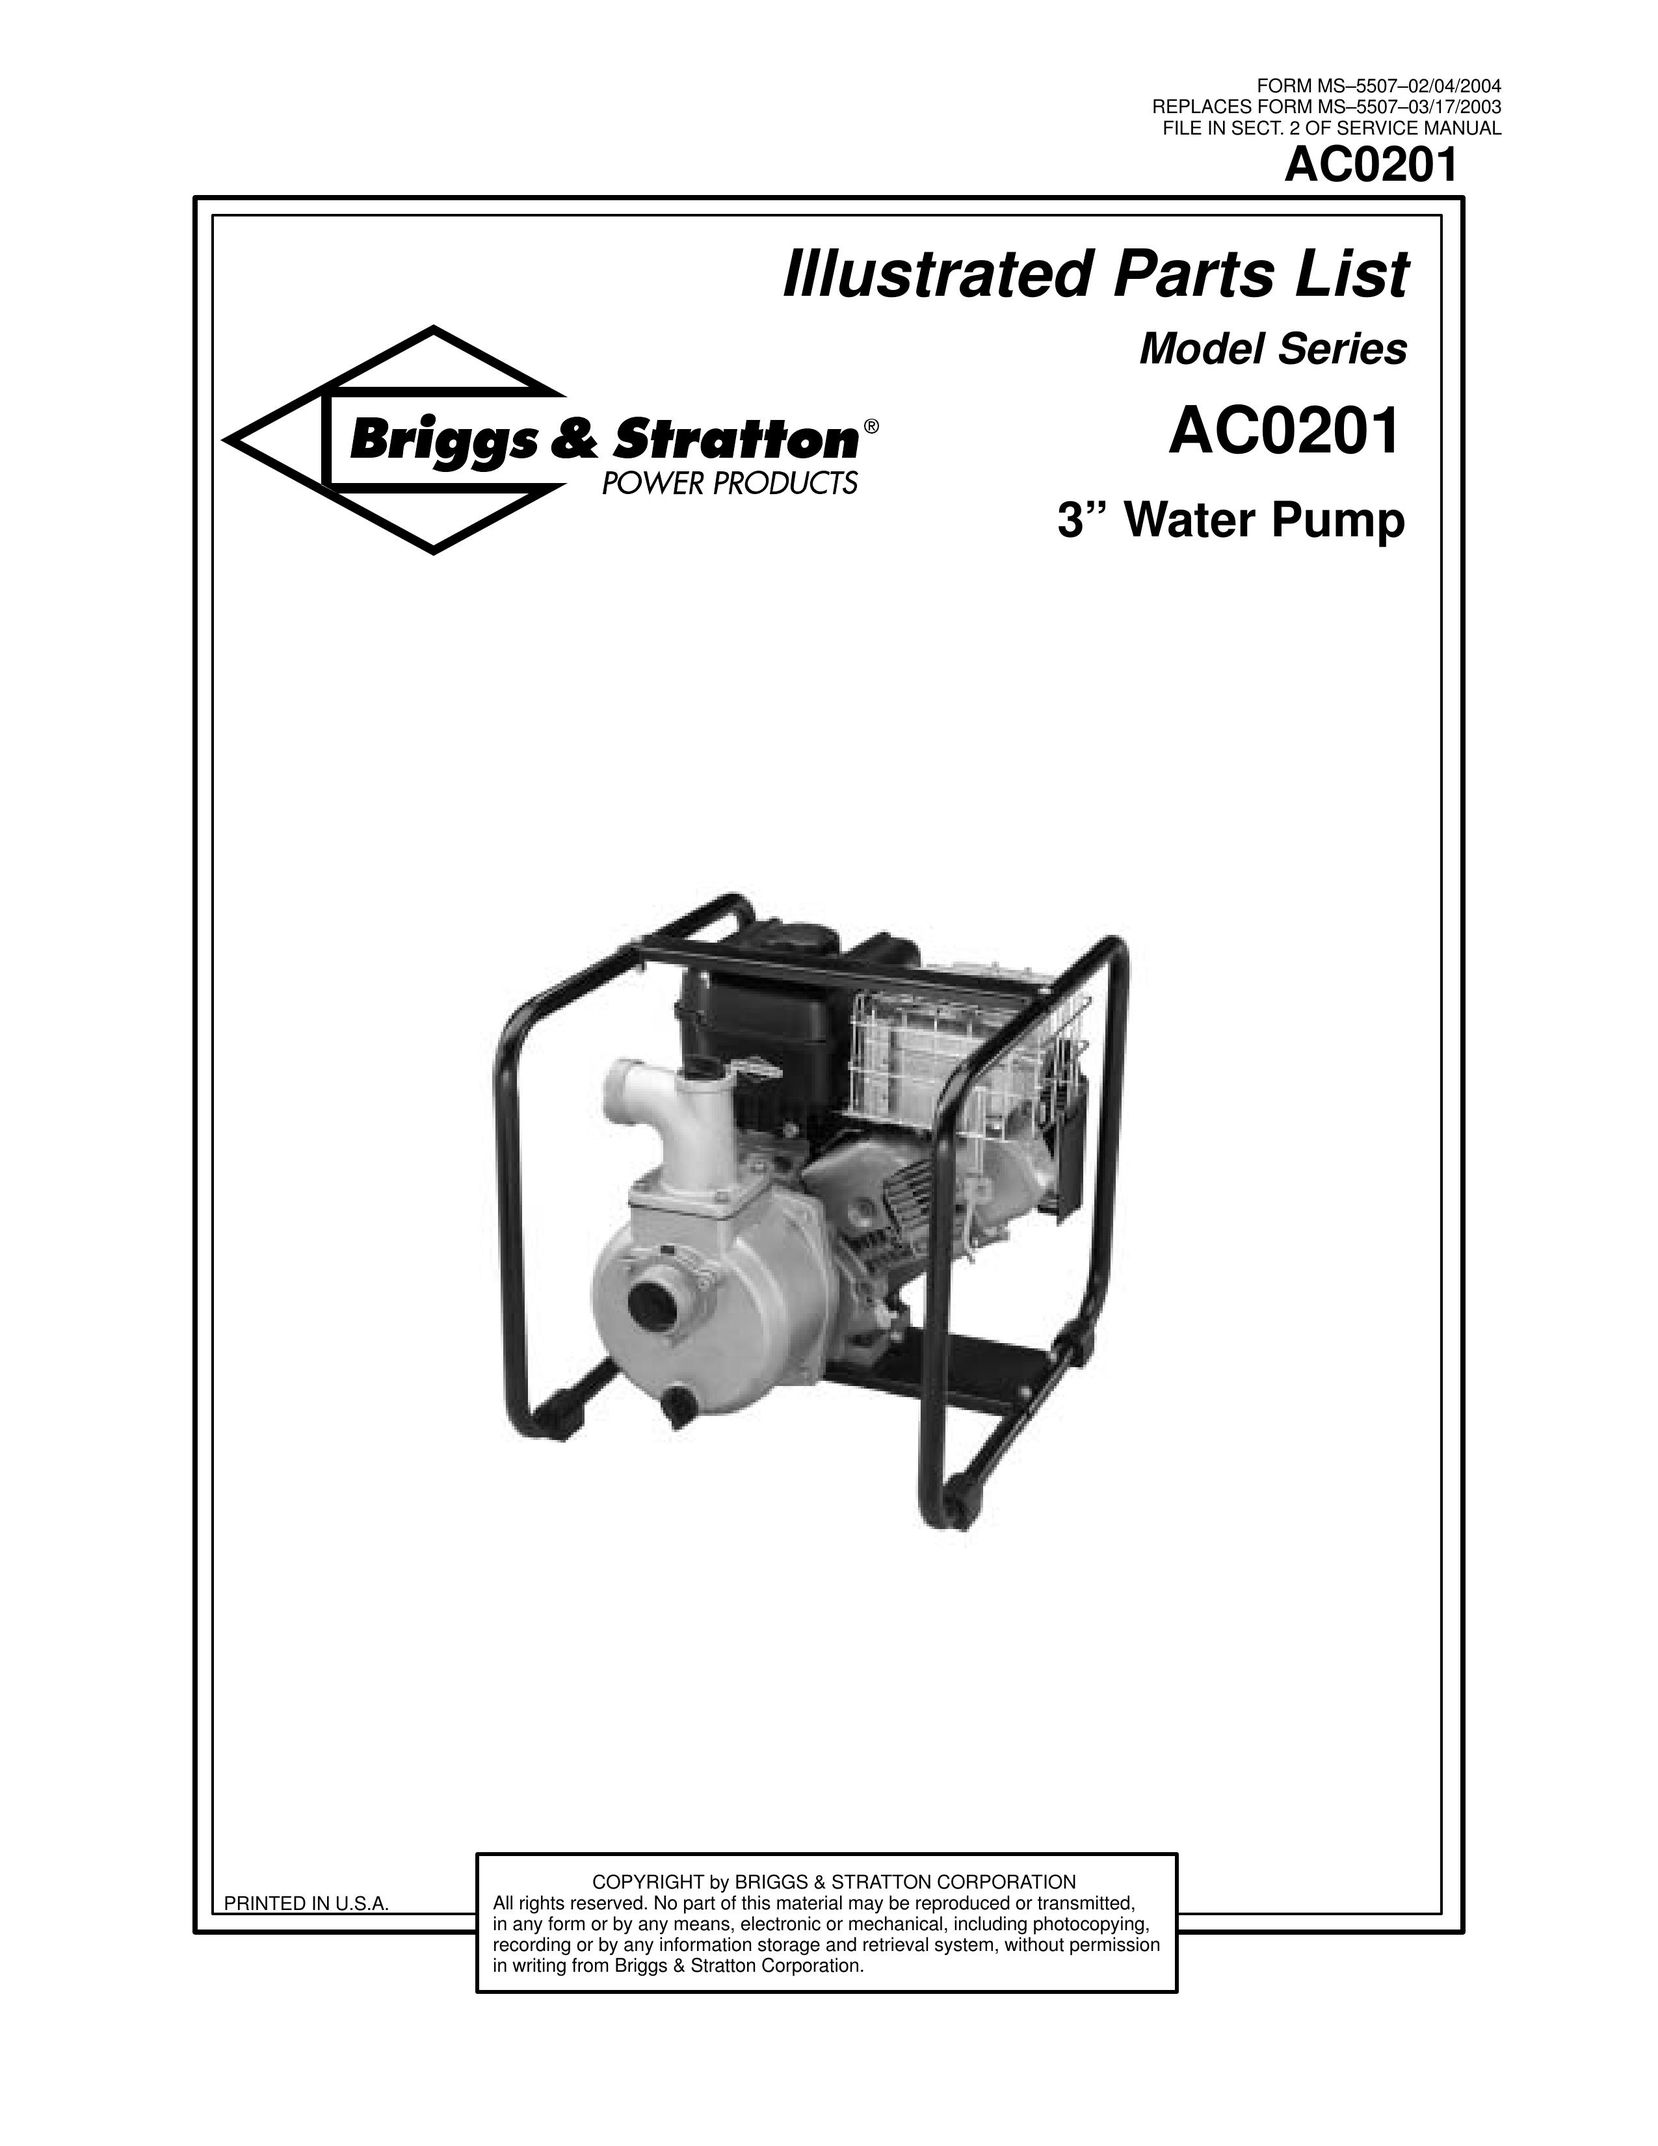 Briggs & Stratton AC0201 Plumbing Product User Manual